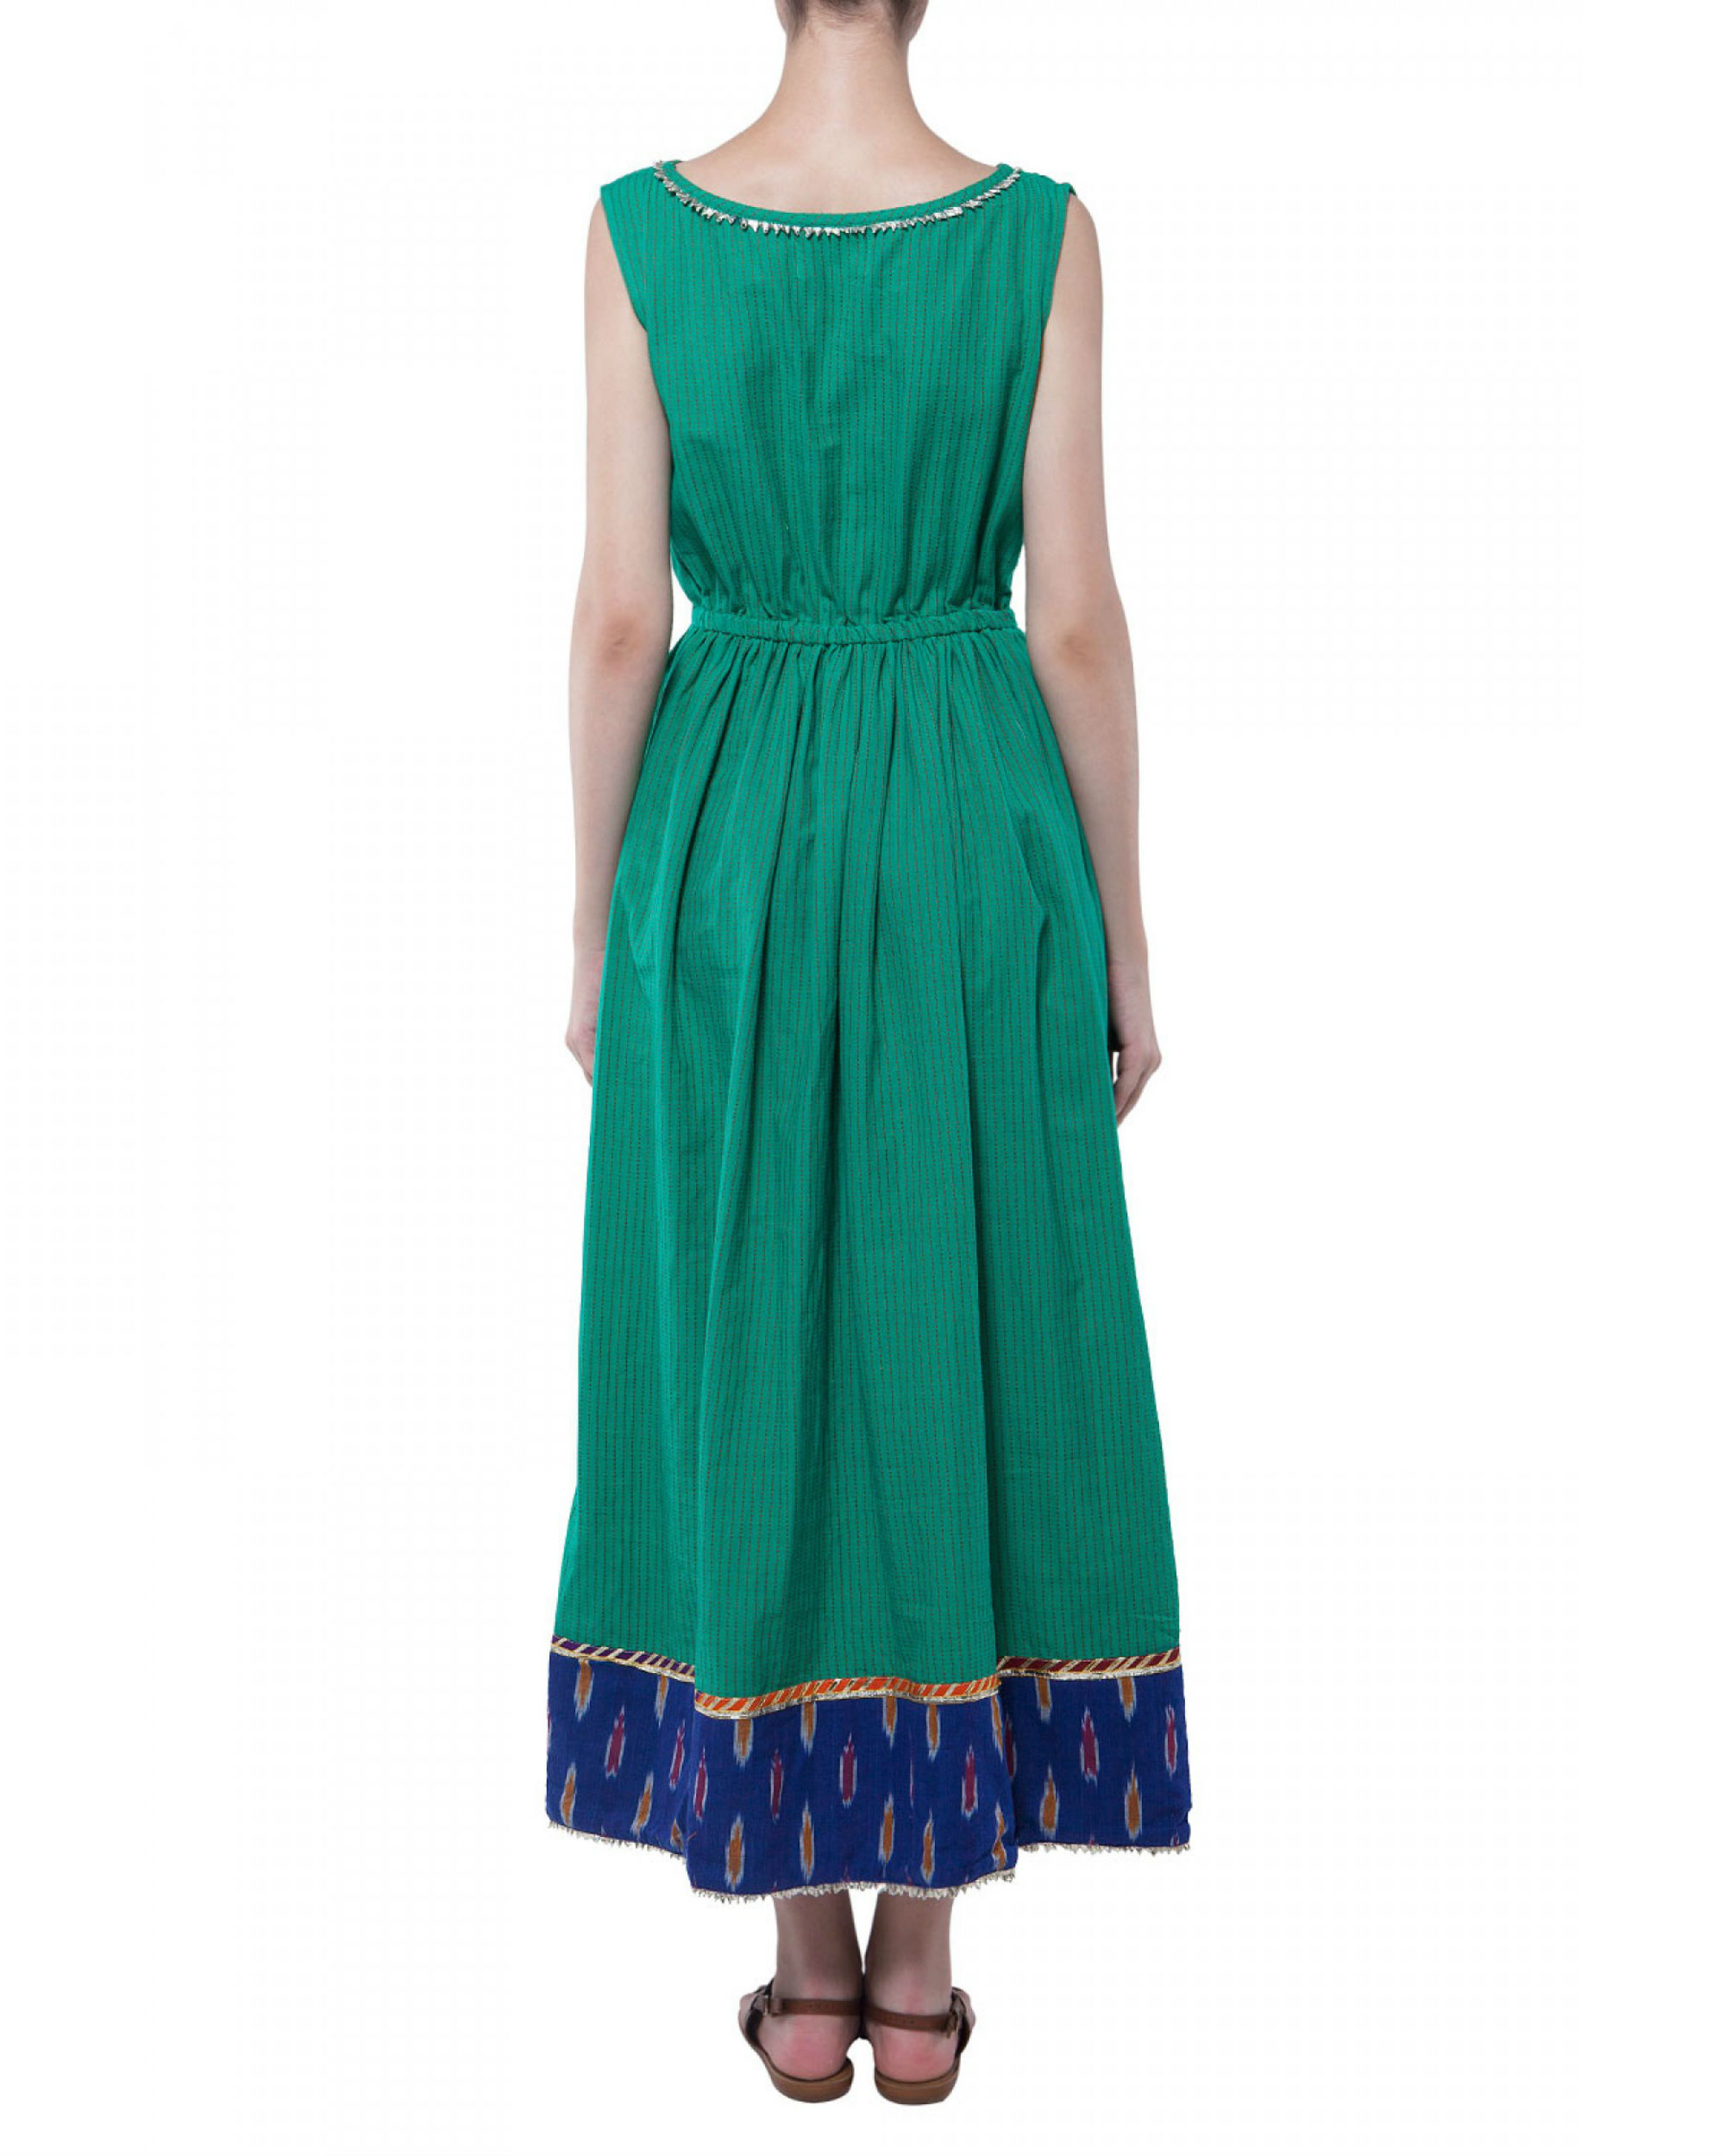 Green handloom dress by Free Living | The Secret Label